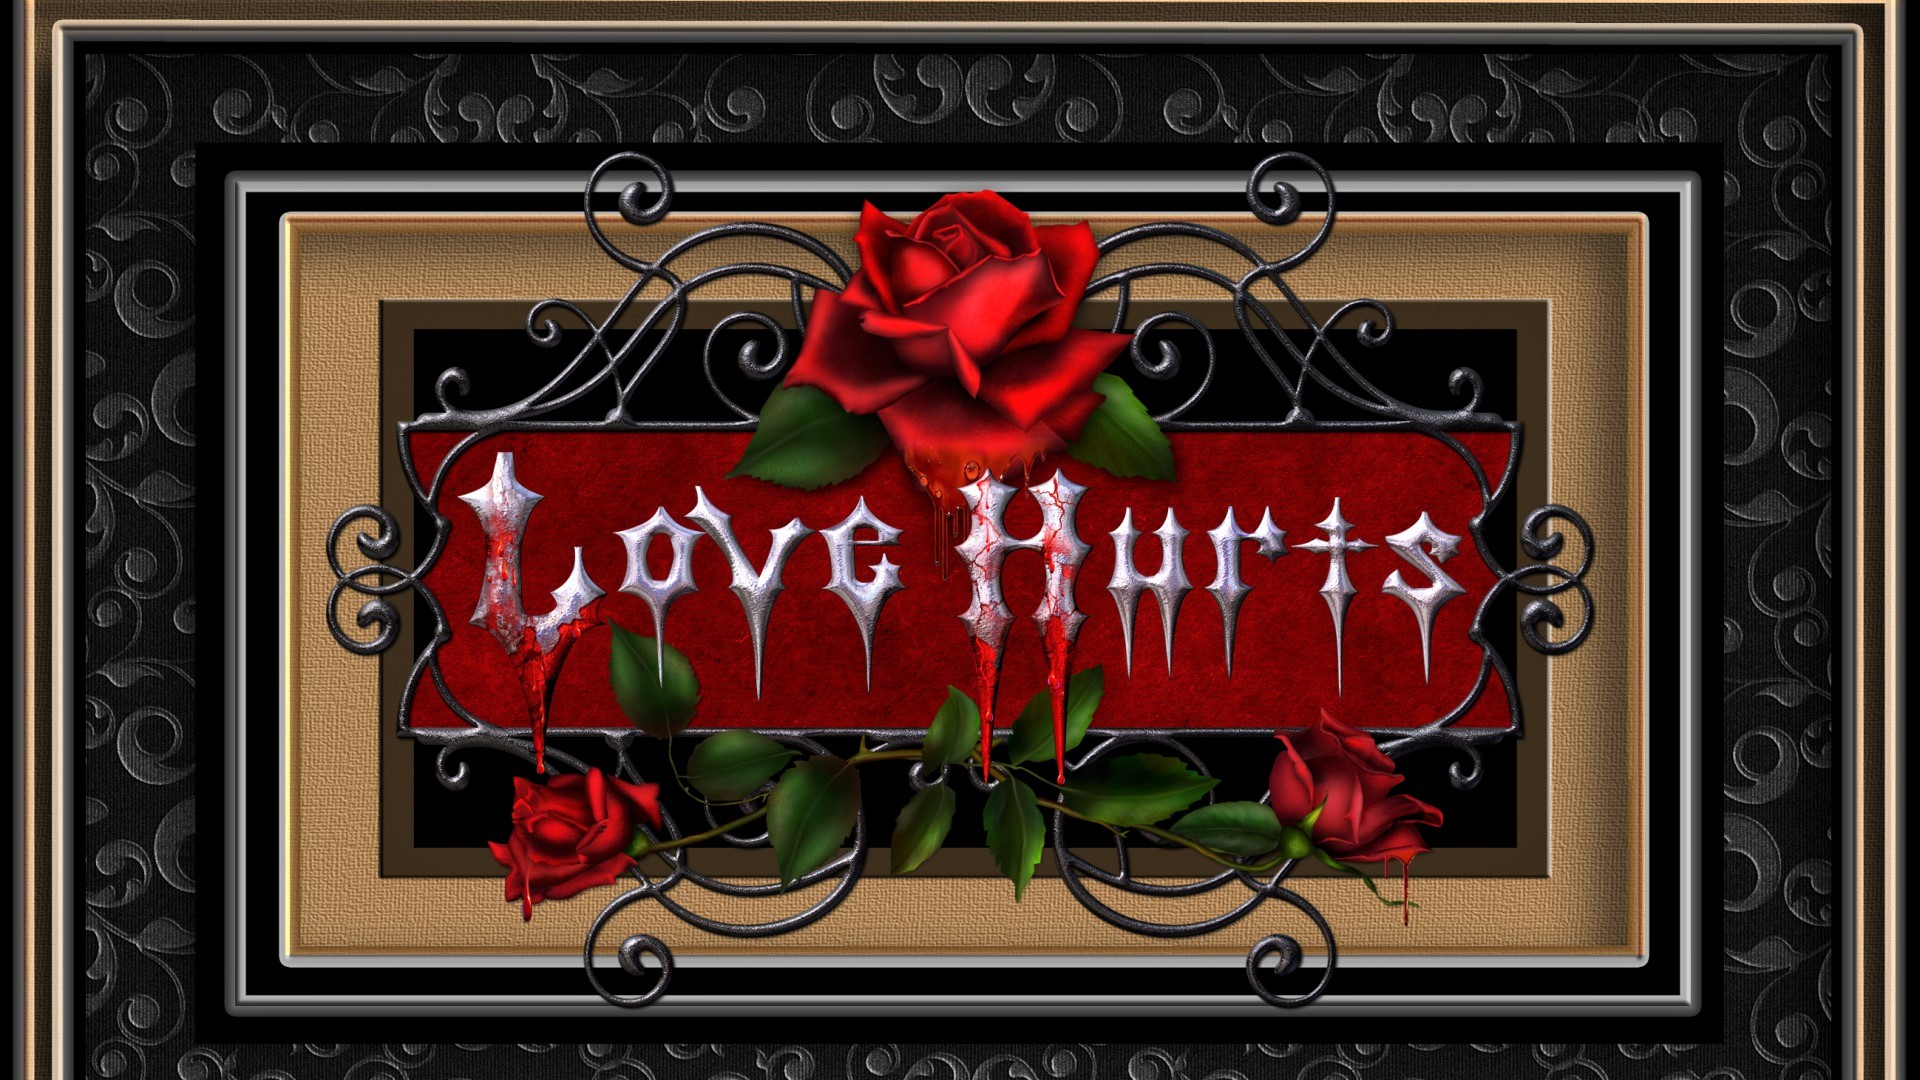 artistic, love, blood, design, frame, gothic, red rose, rose